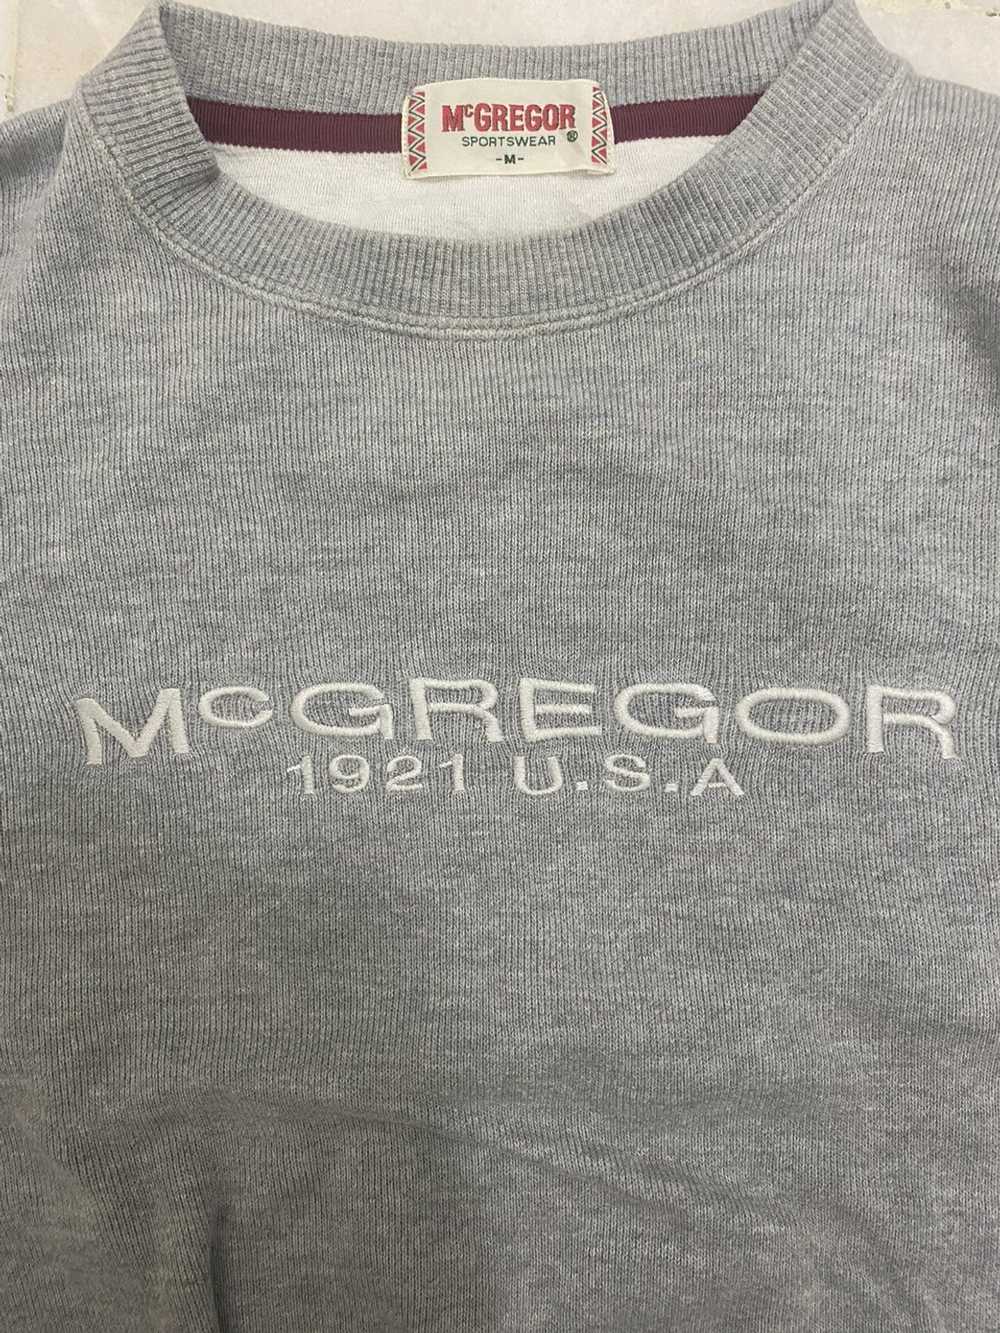 Mcgregor × Vintage McGregor Sweatshirt Vintage 90s - image 7